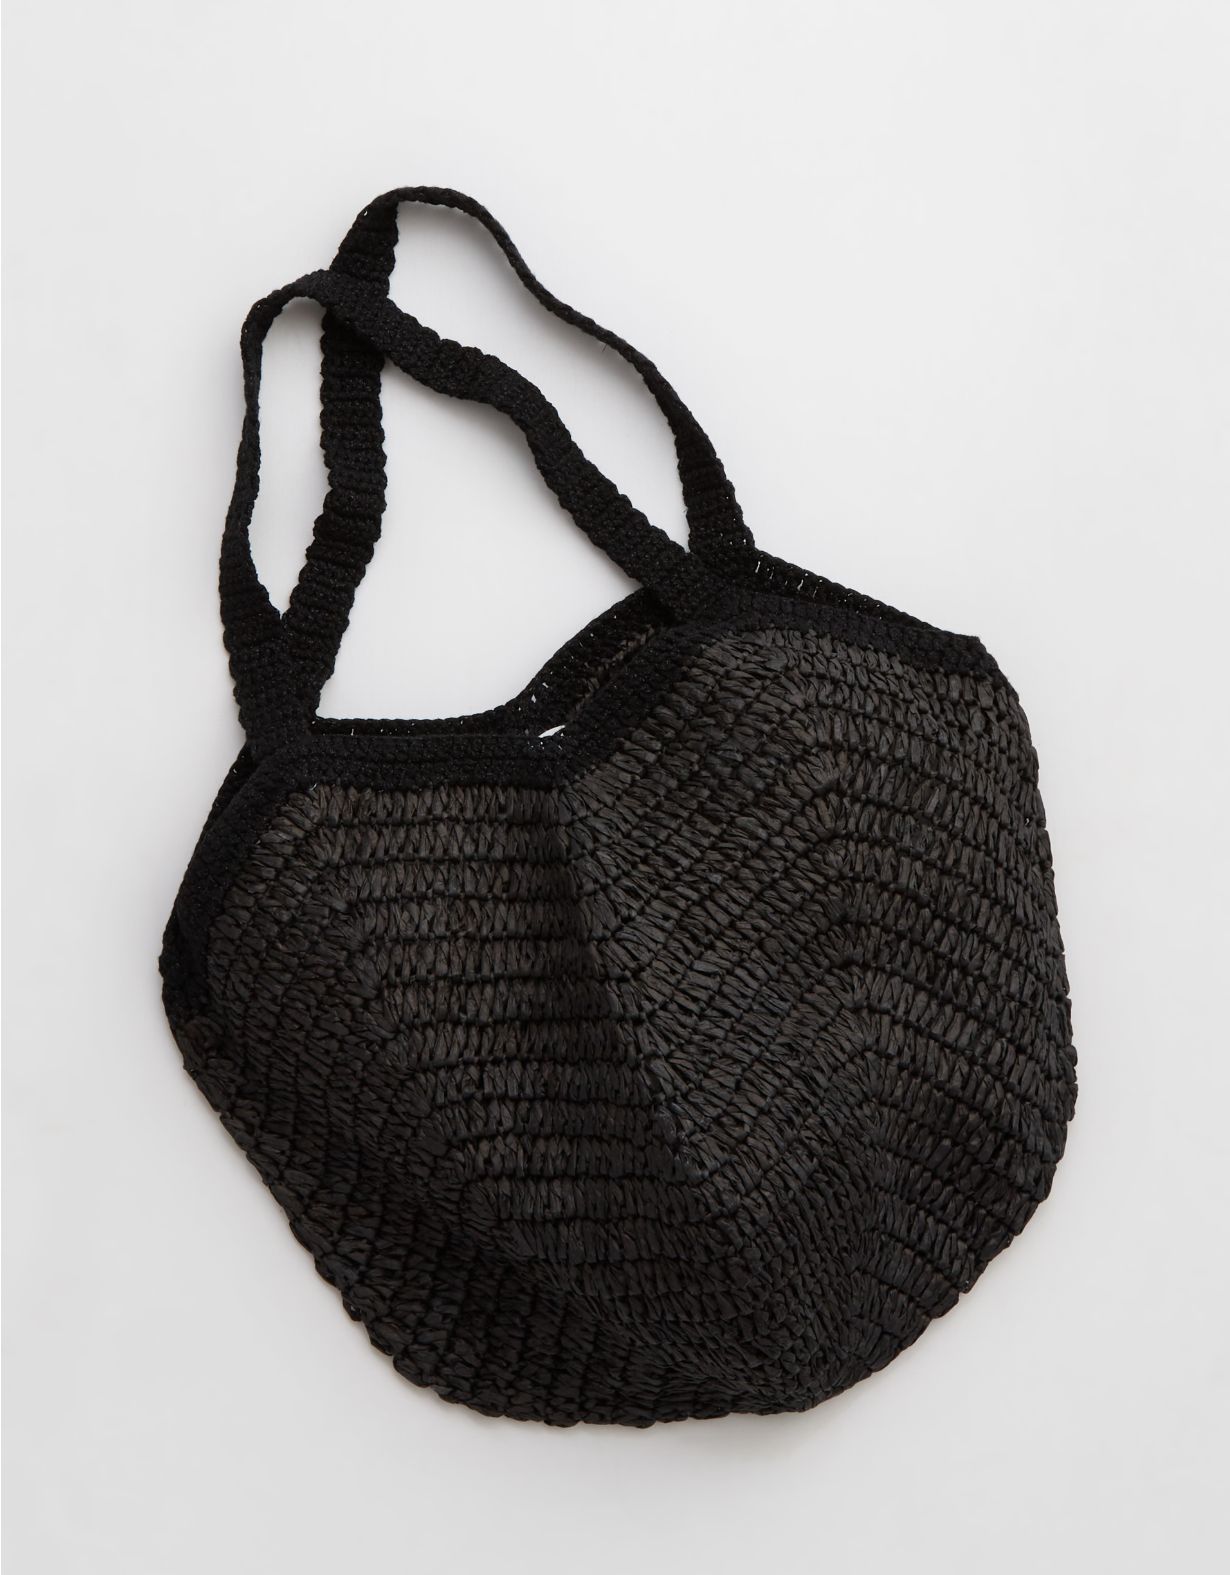 Aerie Crochet Metallic Tote Bag